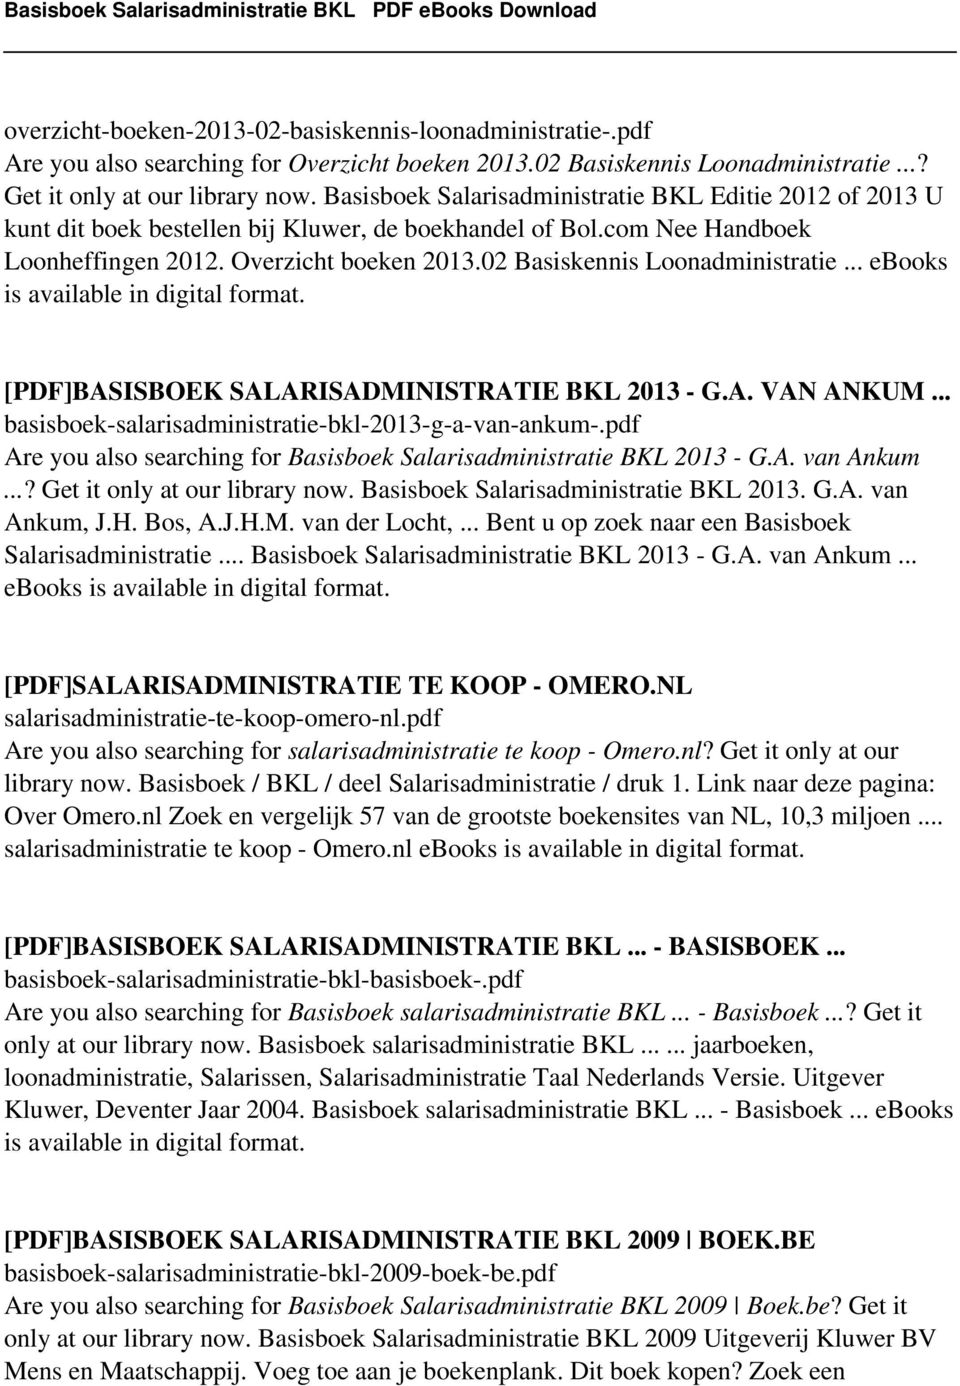 02 Basiskennis Loonadministratie... ebooks is [PDF]BASISBOEK SALARISADMINISTRATIE BKL 2013 - G.A. VAN ANKUM... basisboek-salarisadministratie-bkl-2013-g-a-van-ankum-.